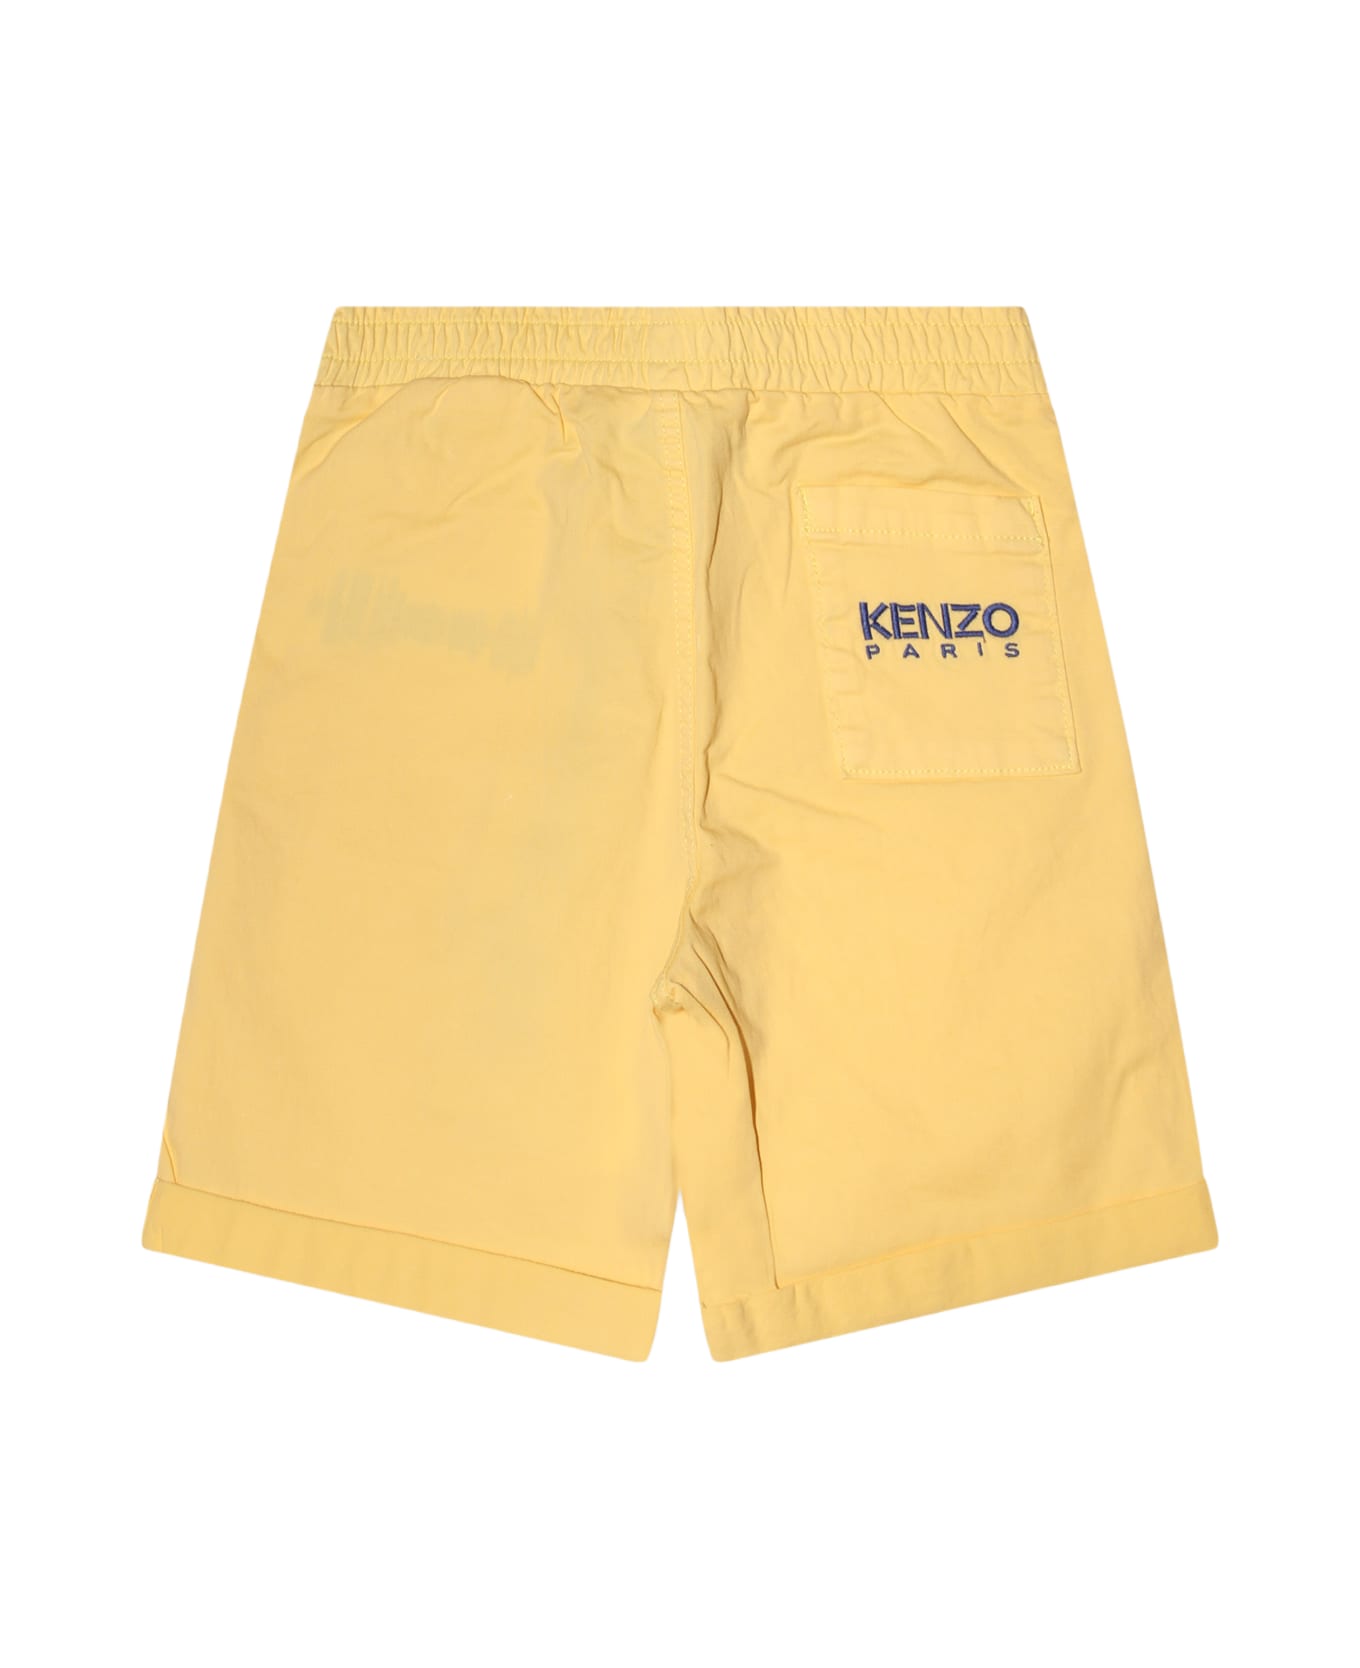 Kenzo Yellow Cotton Shorts - Yellow